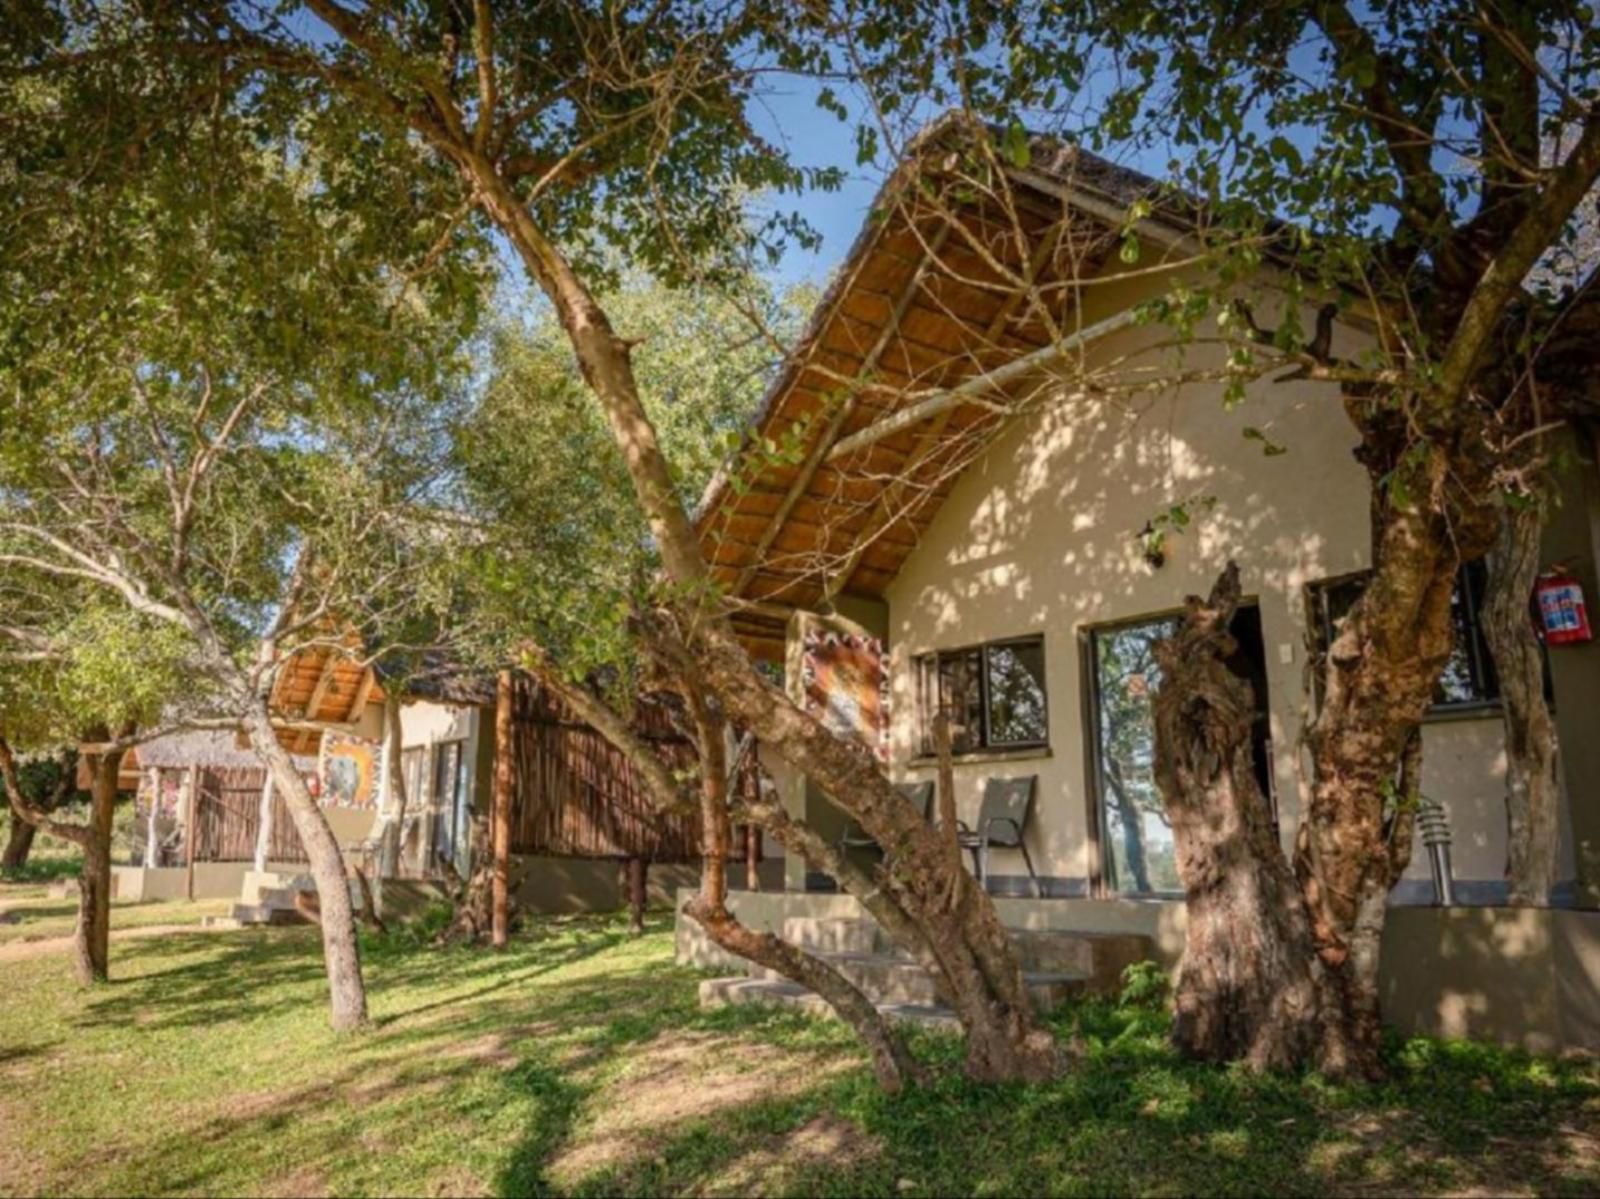 Umkumbe Safari Lodge Riverside Sabi Sand Reserve Mpumalanga South Africa House, Building, Architecture